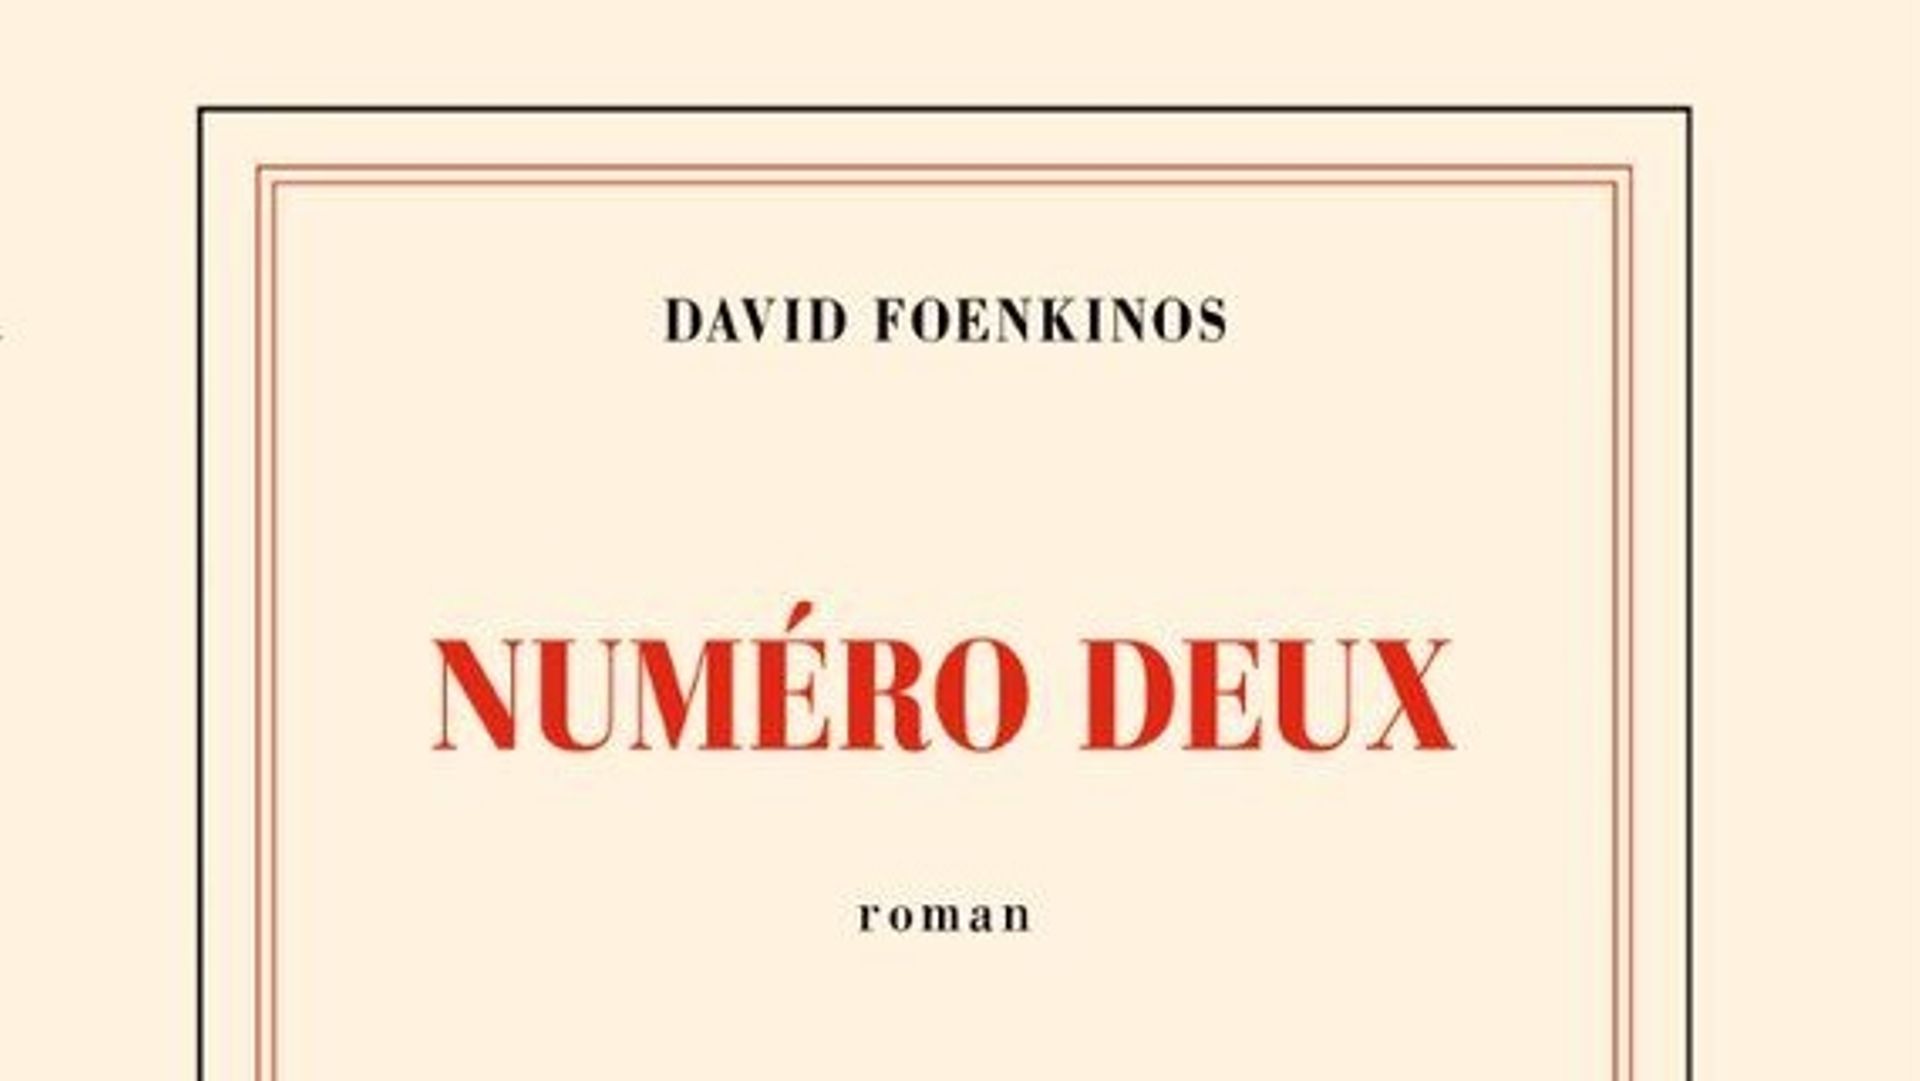 "Numéro deux" de David Foenkinos